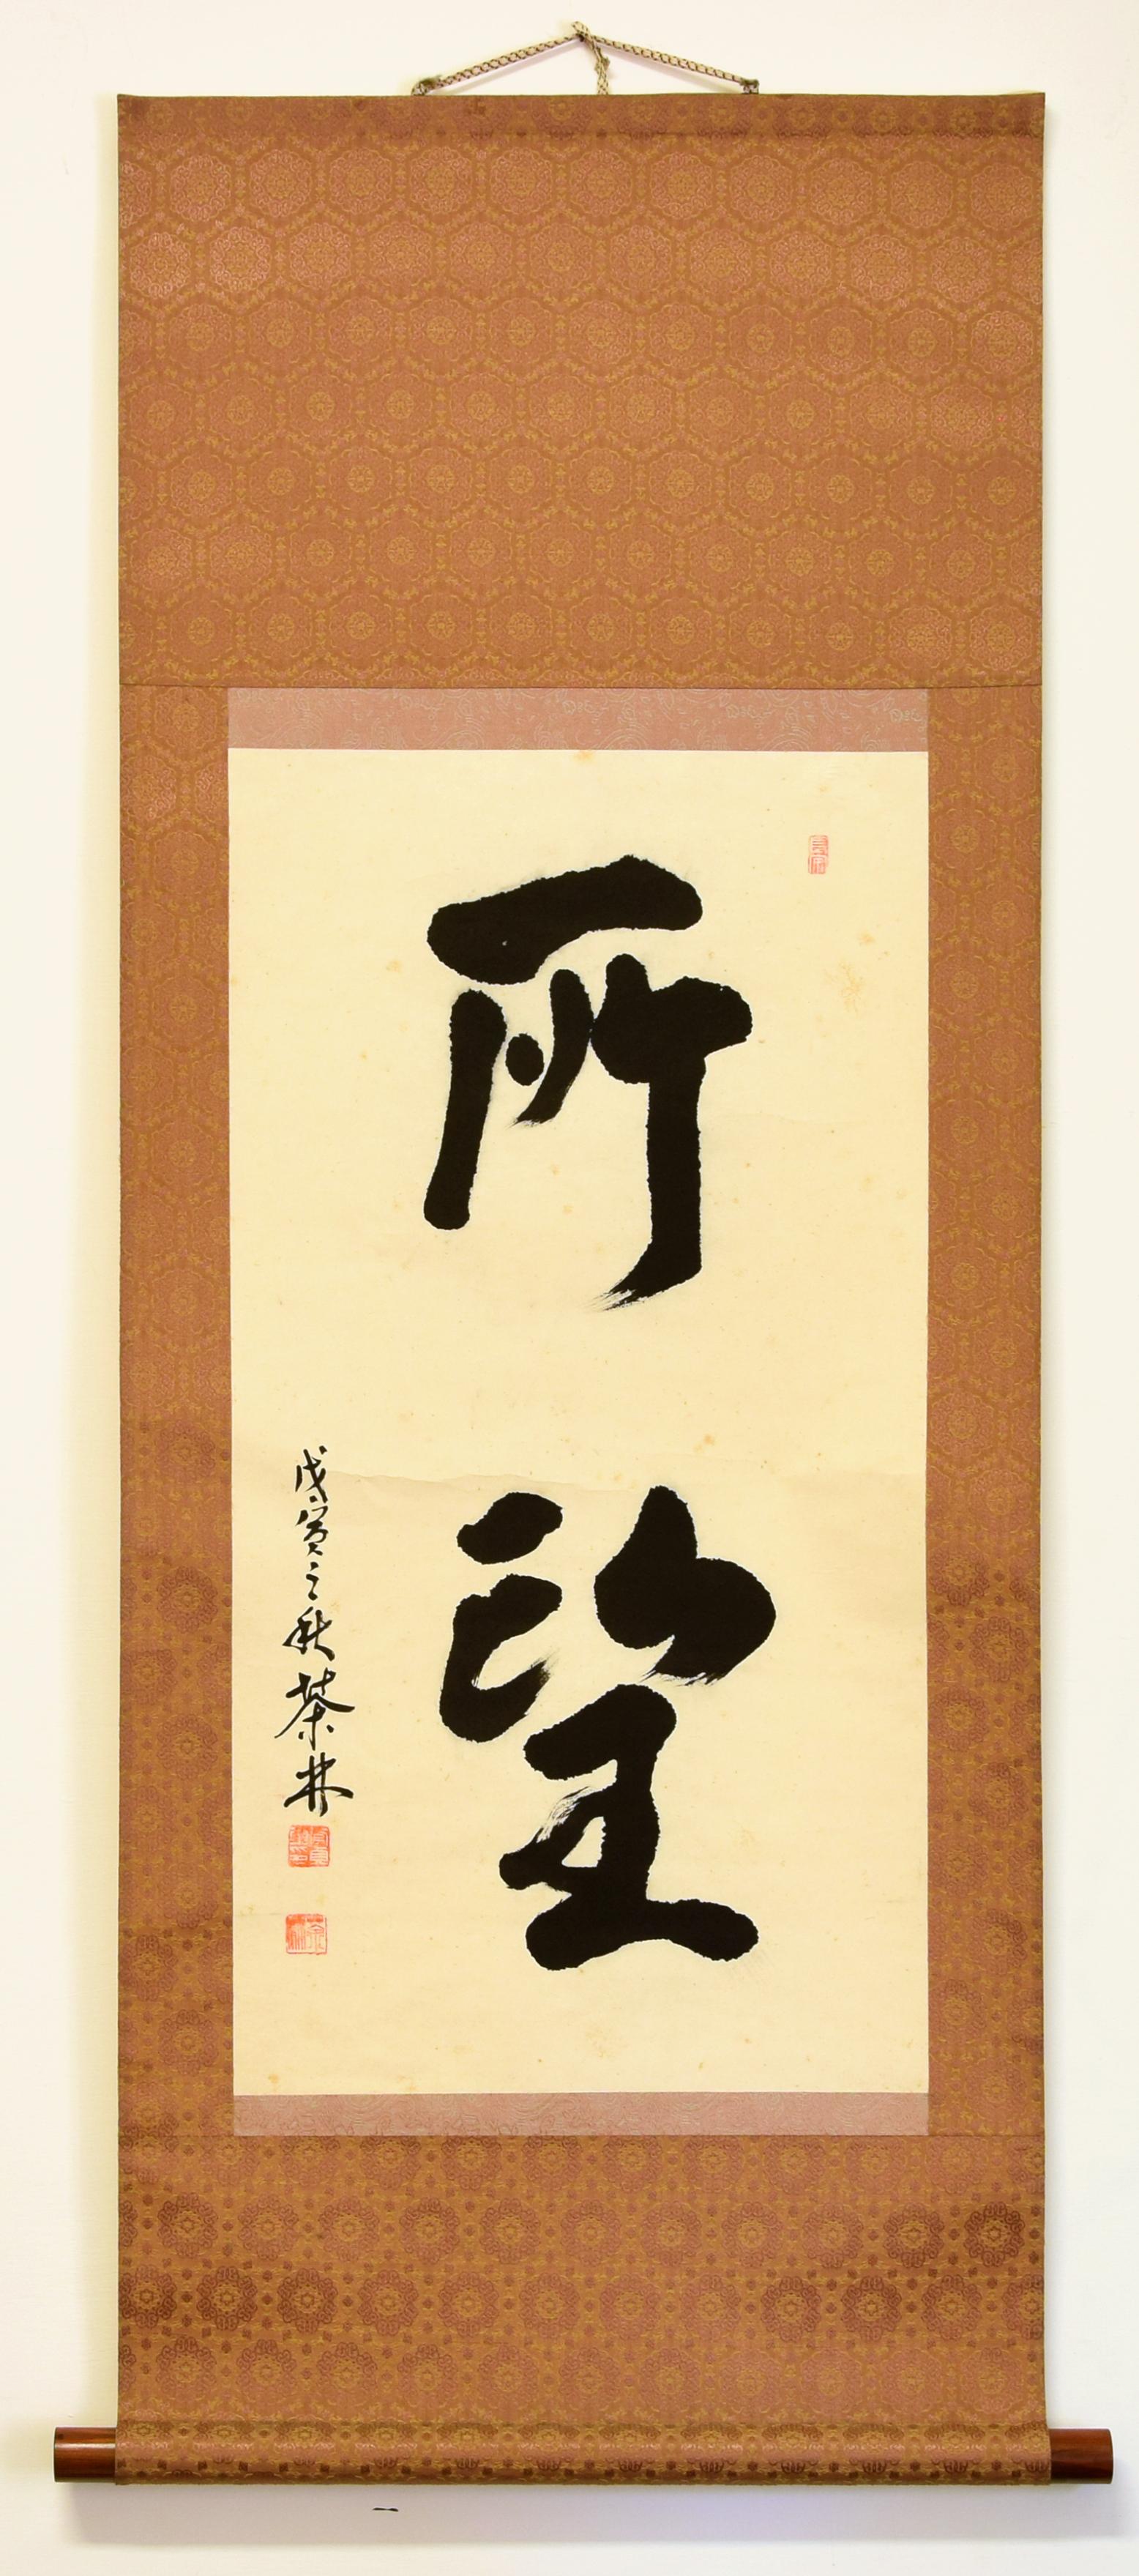 Suo Wang: Chinese Artistic Calligraphy by Li Zhen - 1938 1